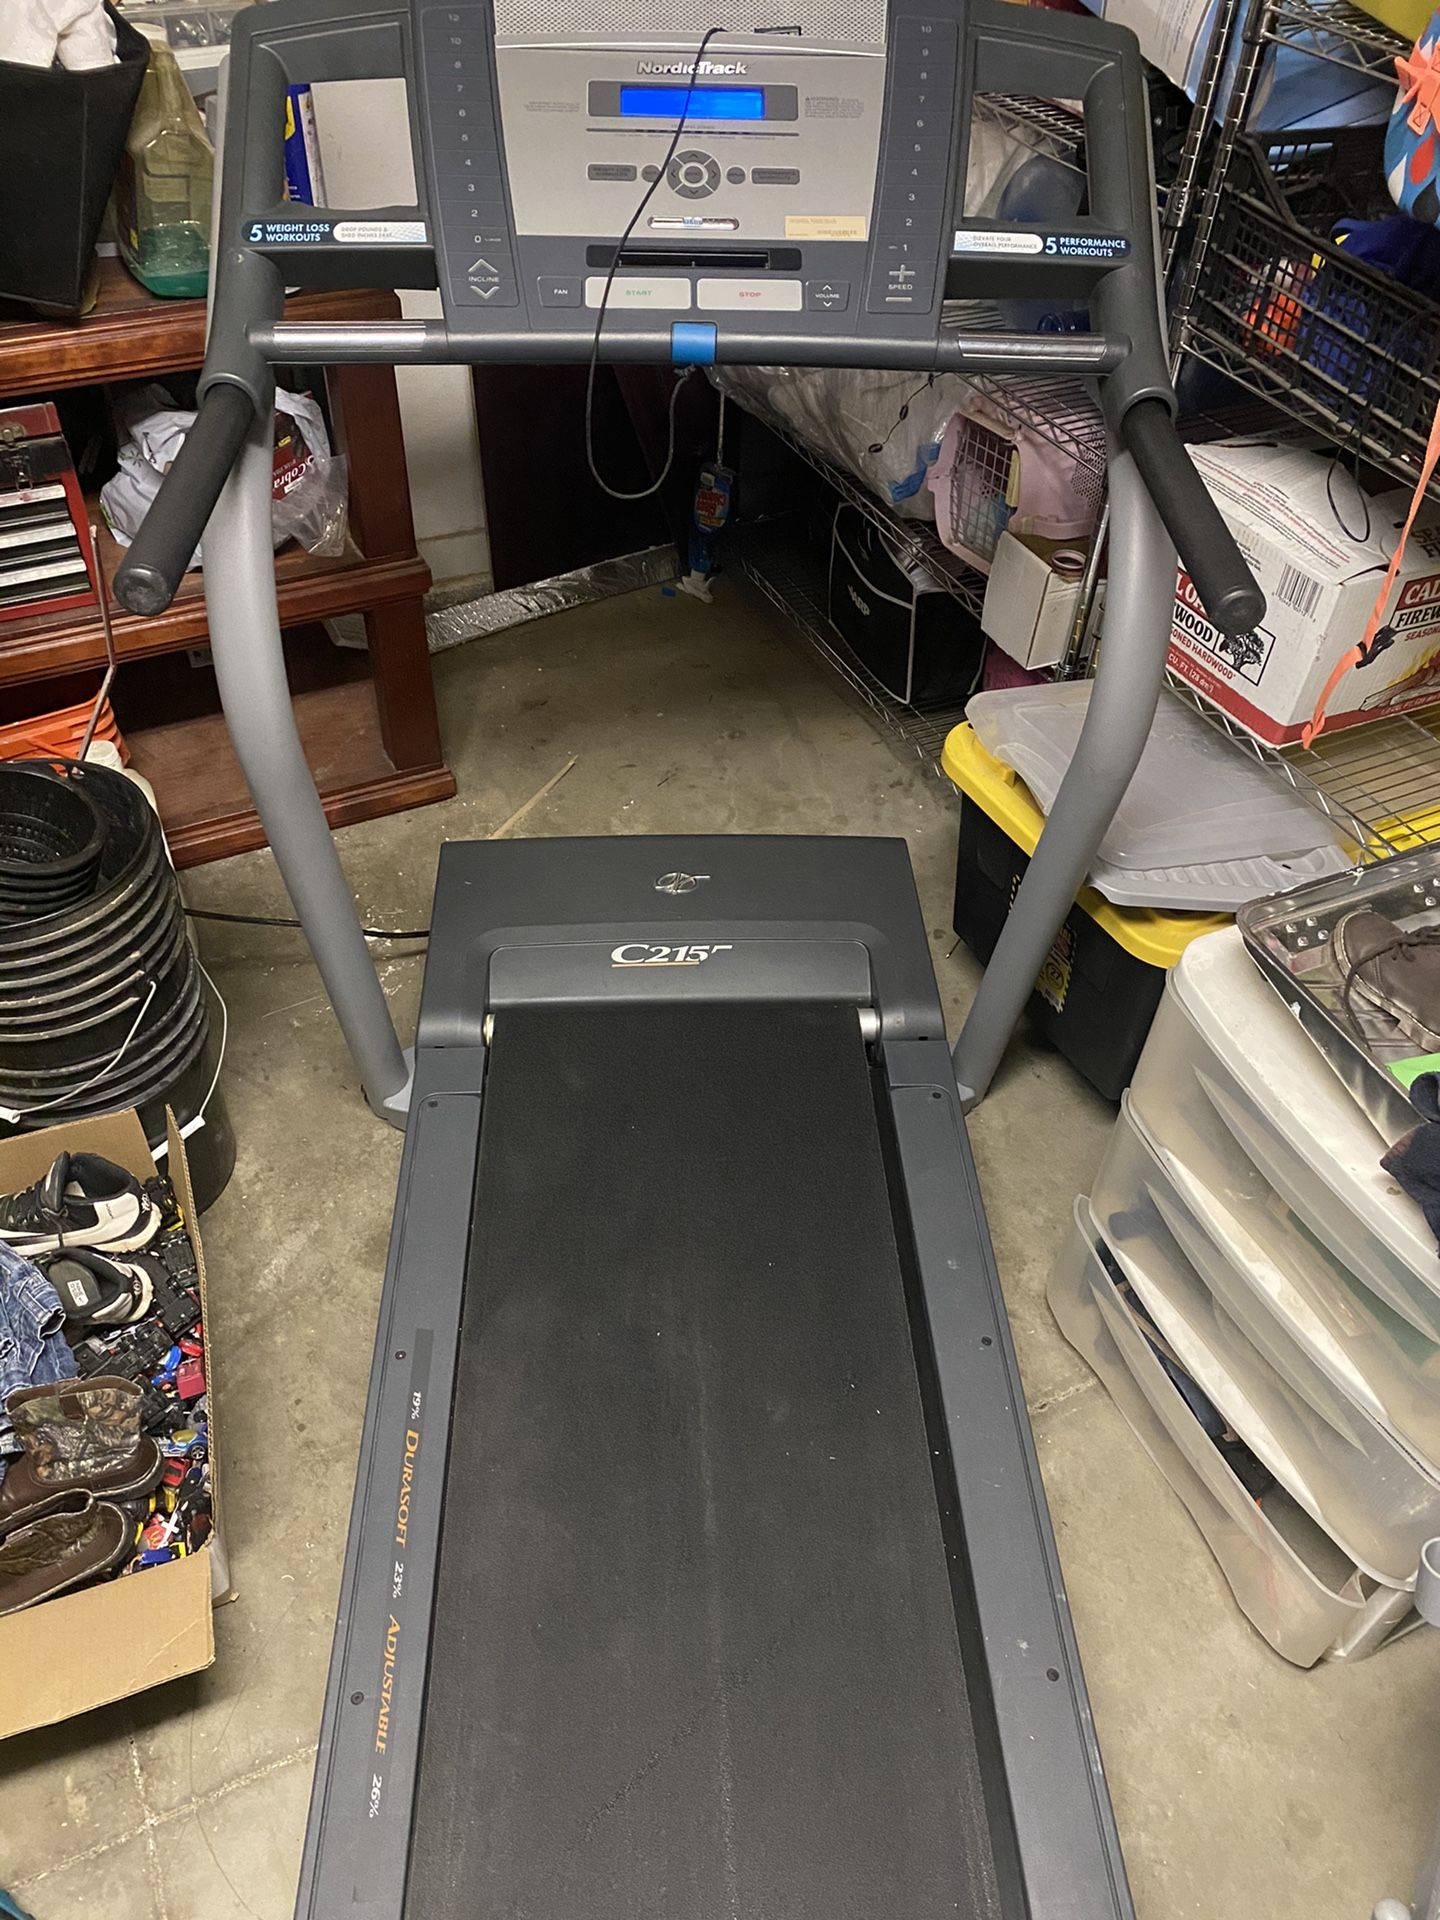 Treadmill. Nordictrack space saver